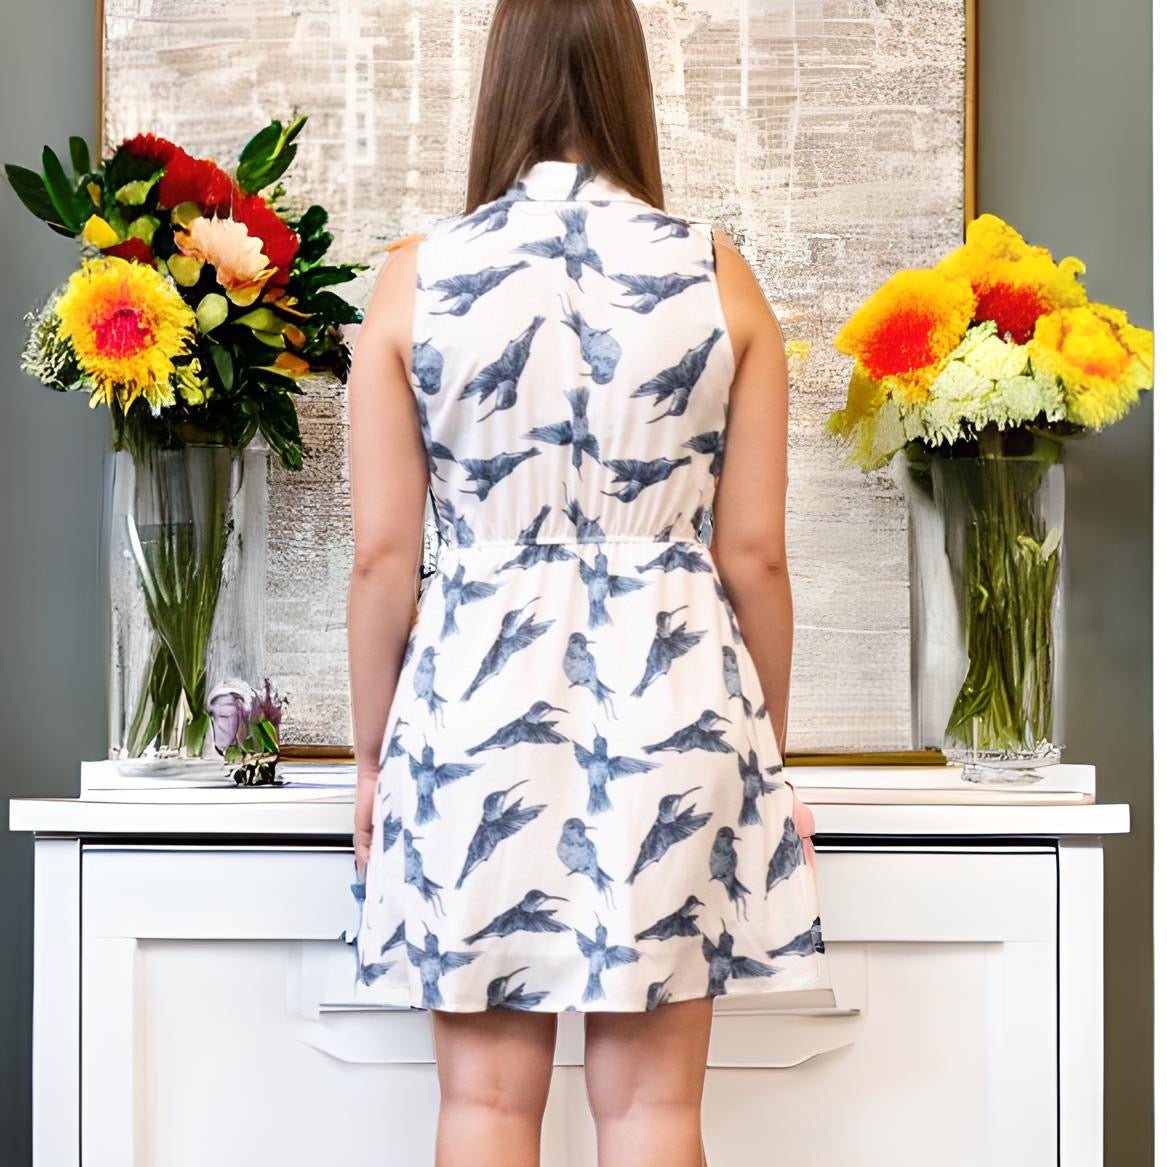 Customized Sleeveless Floral Pattern Dress Above Knee Length w/Stretchable Waist Design - Bird